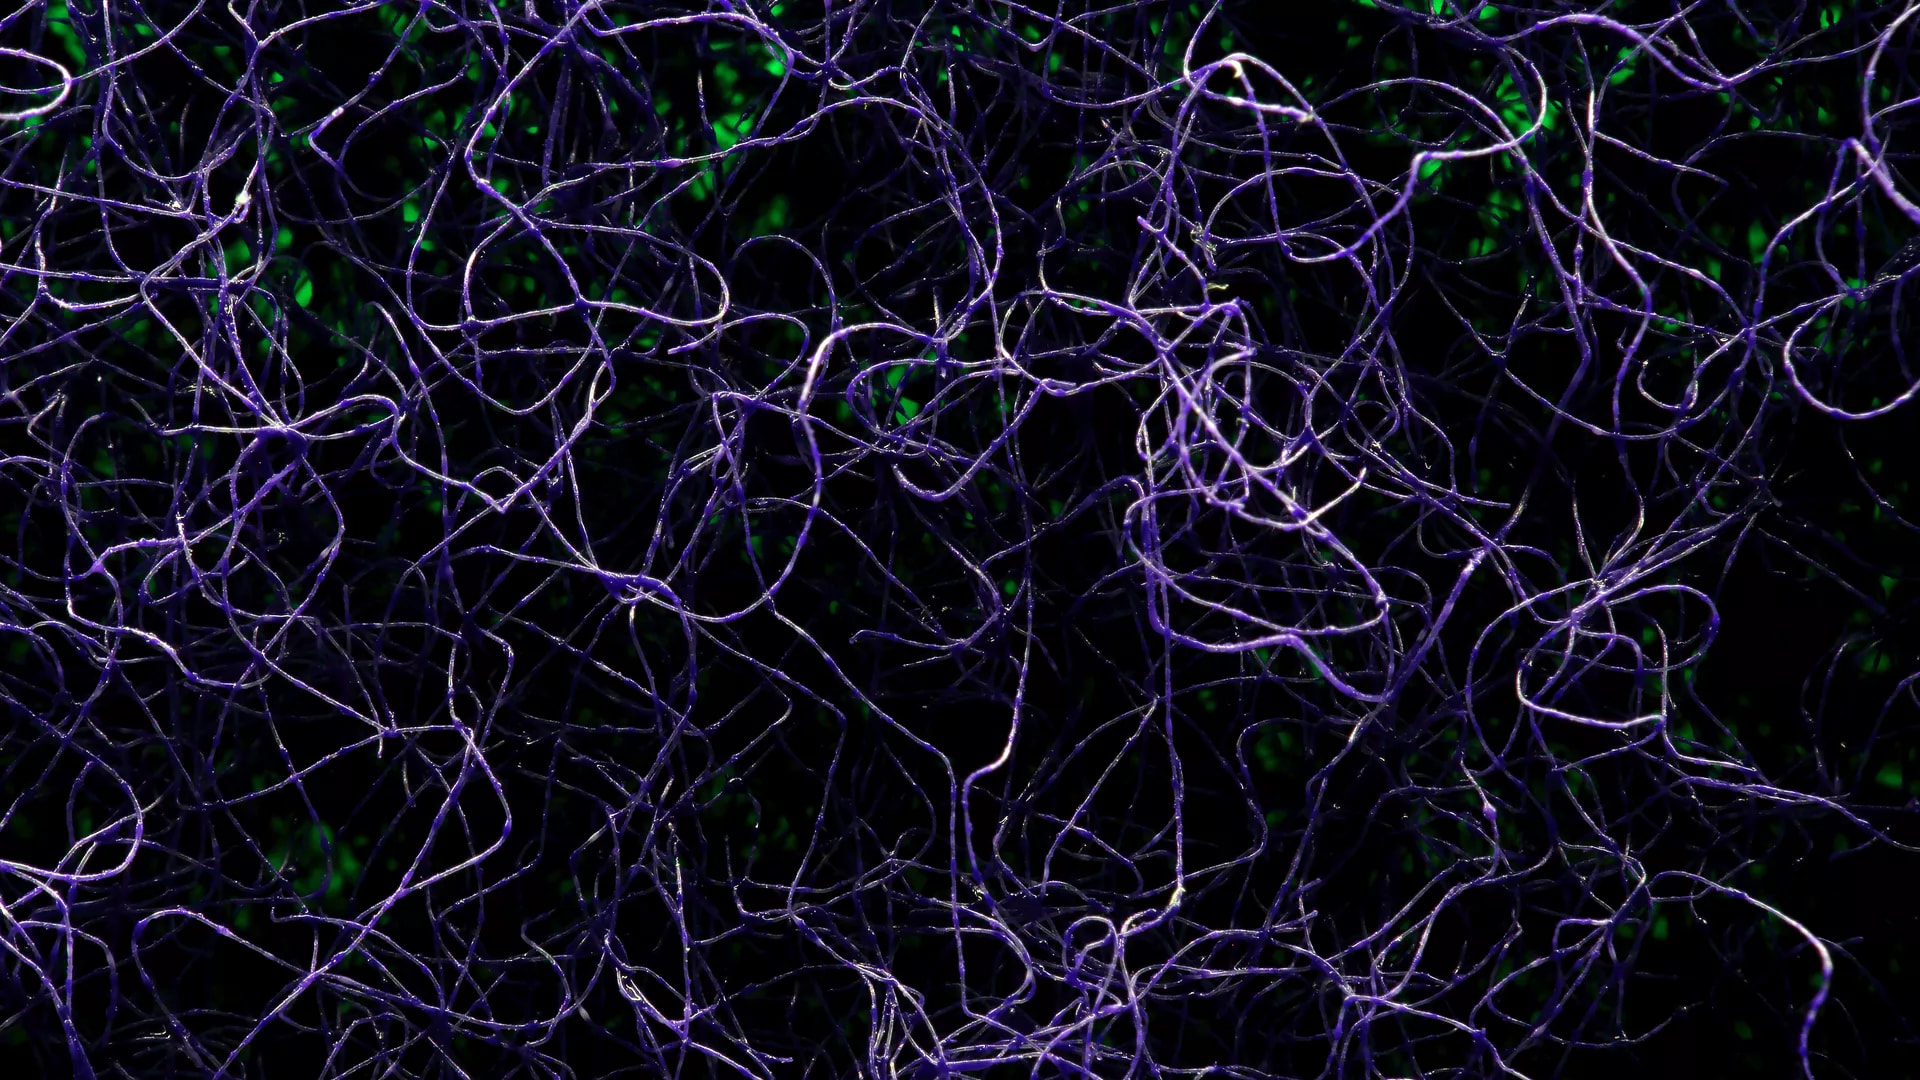 Cover image for "Marine Invertebrates: Neurons, Glia, and Neurotransmitters"